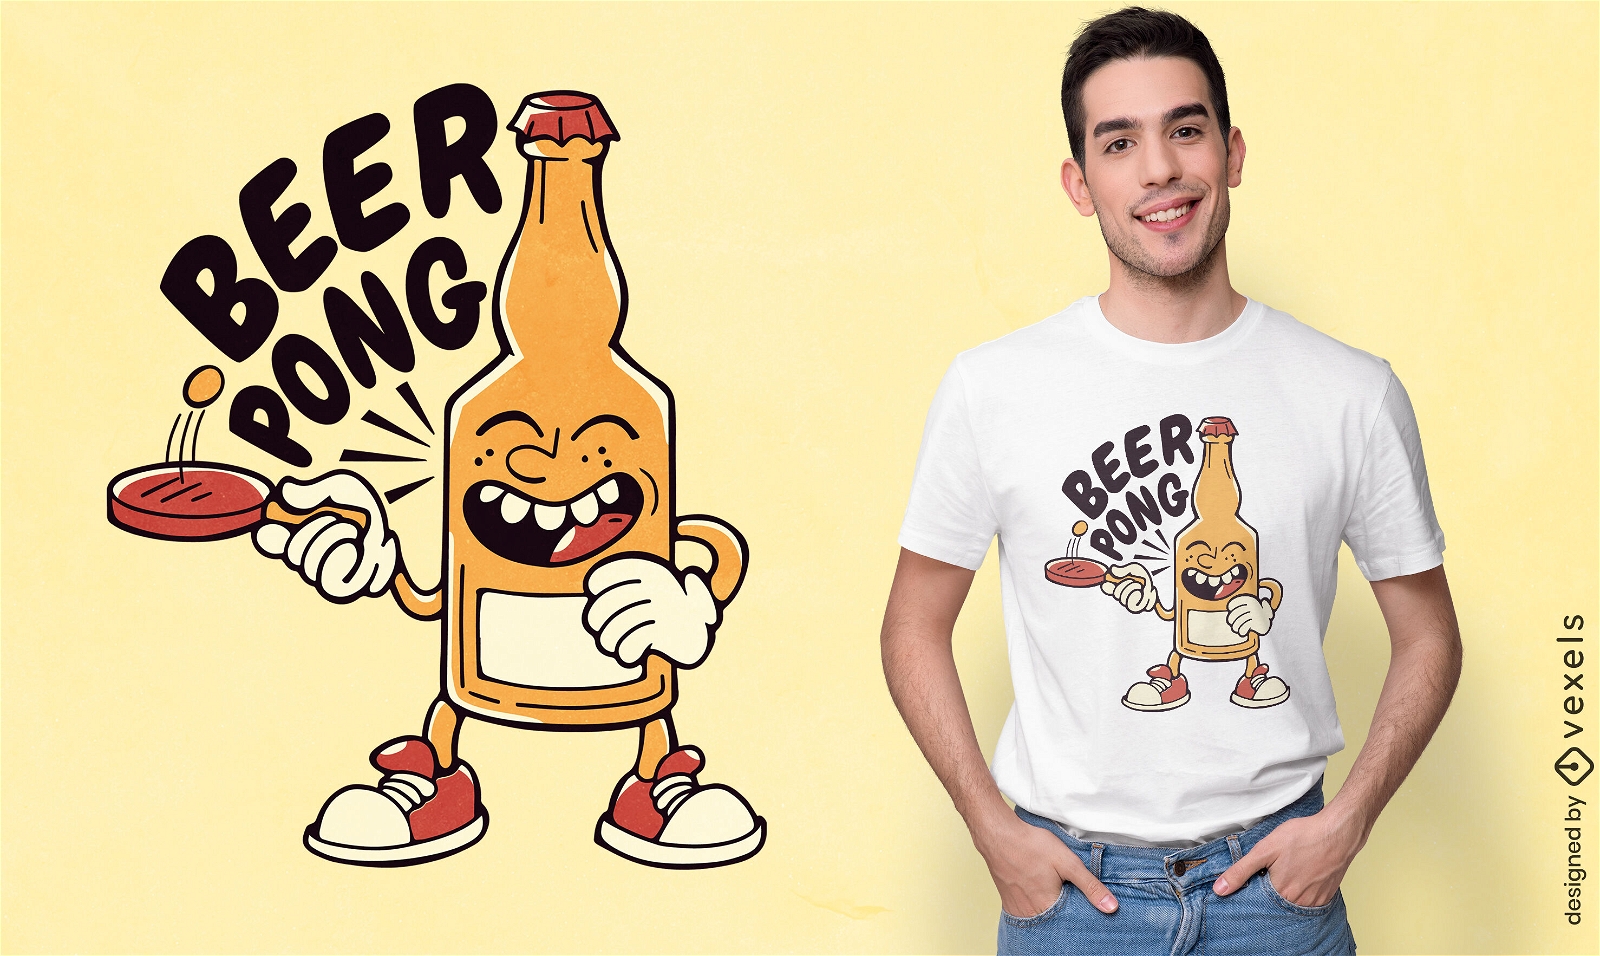 Beer pong character t-shirt design